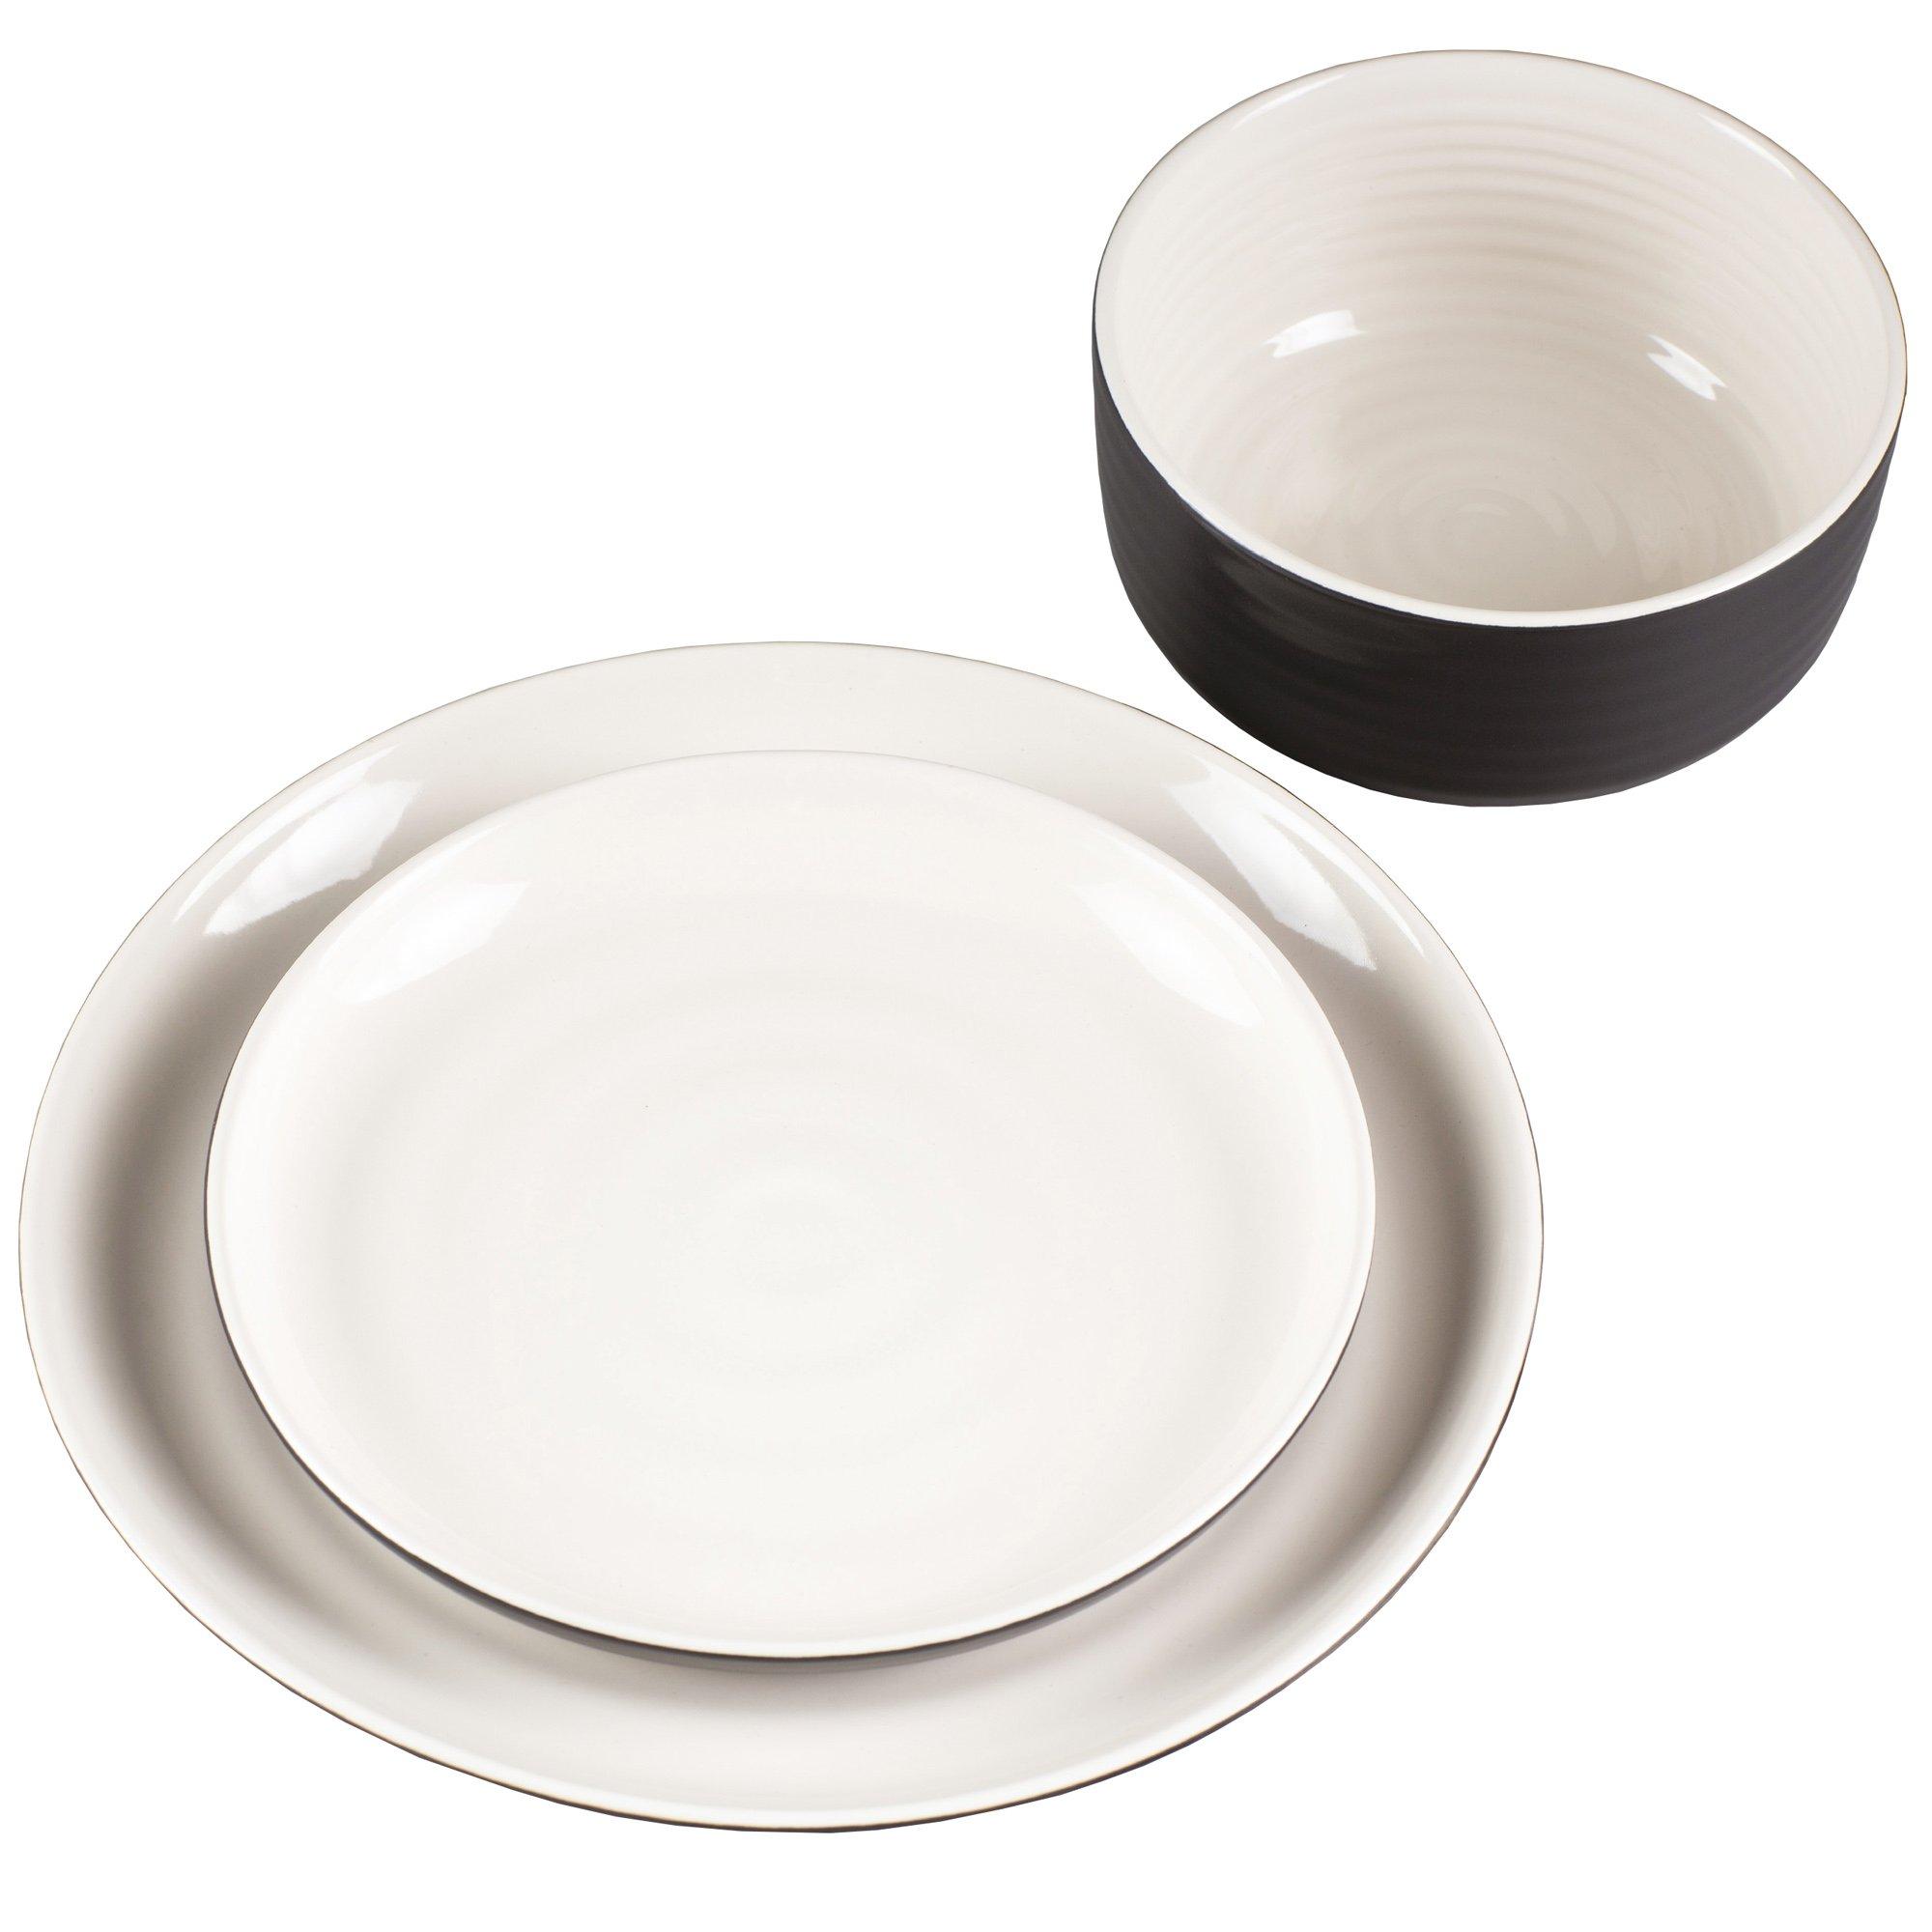 Pimlico 12 PC Dinnerware Set Stoneware With Dinner Plates, Side Plates, Bowls Black